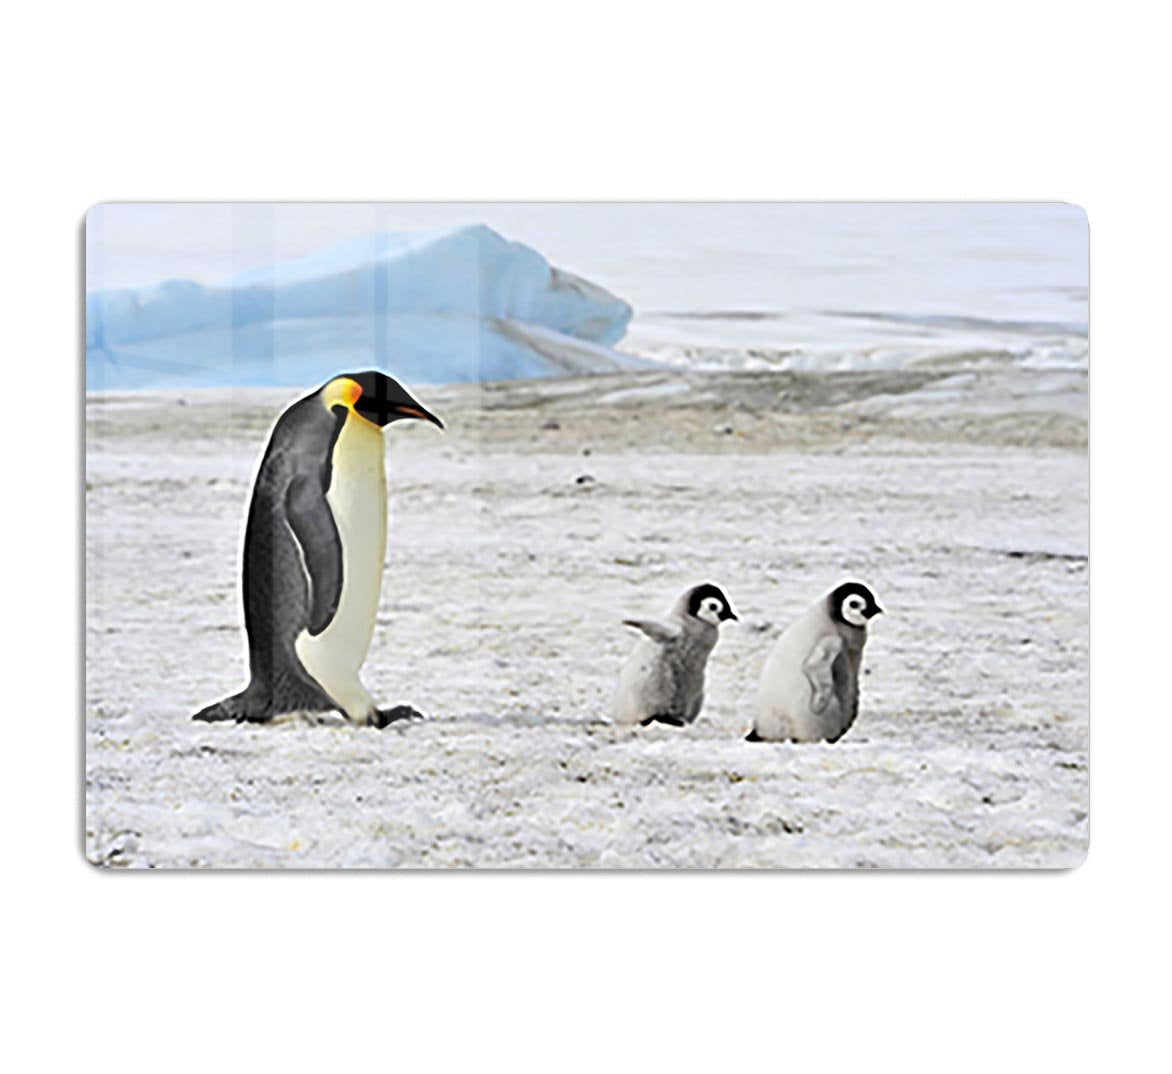 Emperor Penguin with two chicks in Antarctica HD Metal Print - Canvas Art Rocks - 1